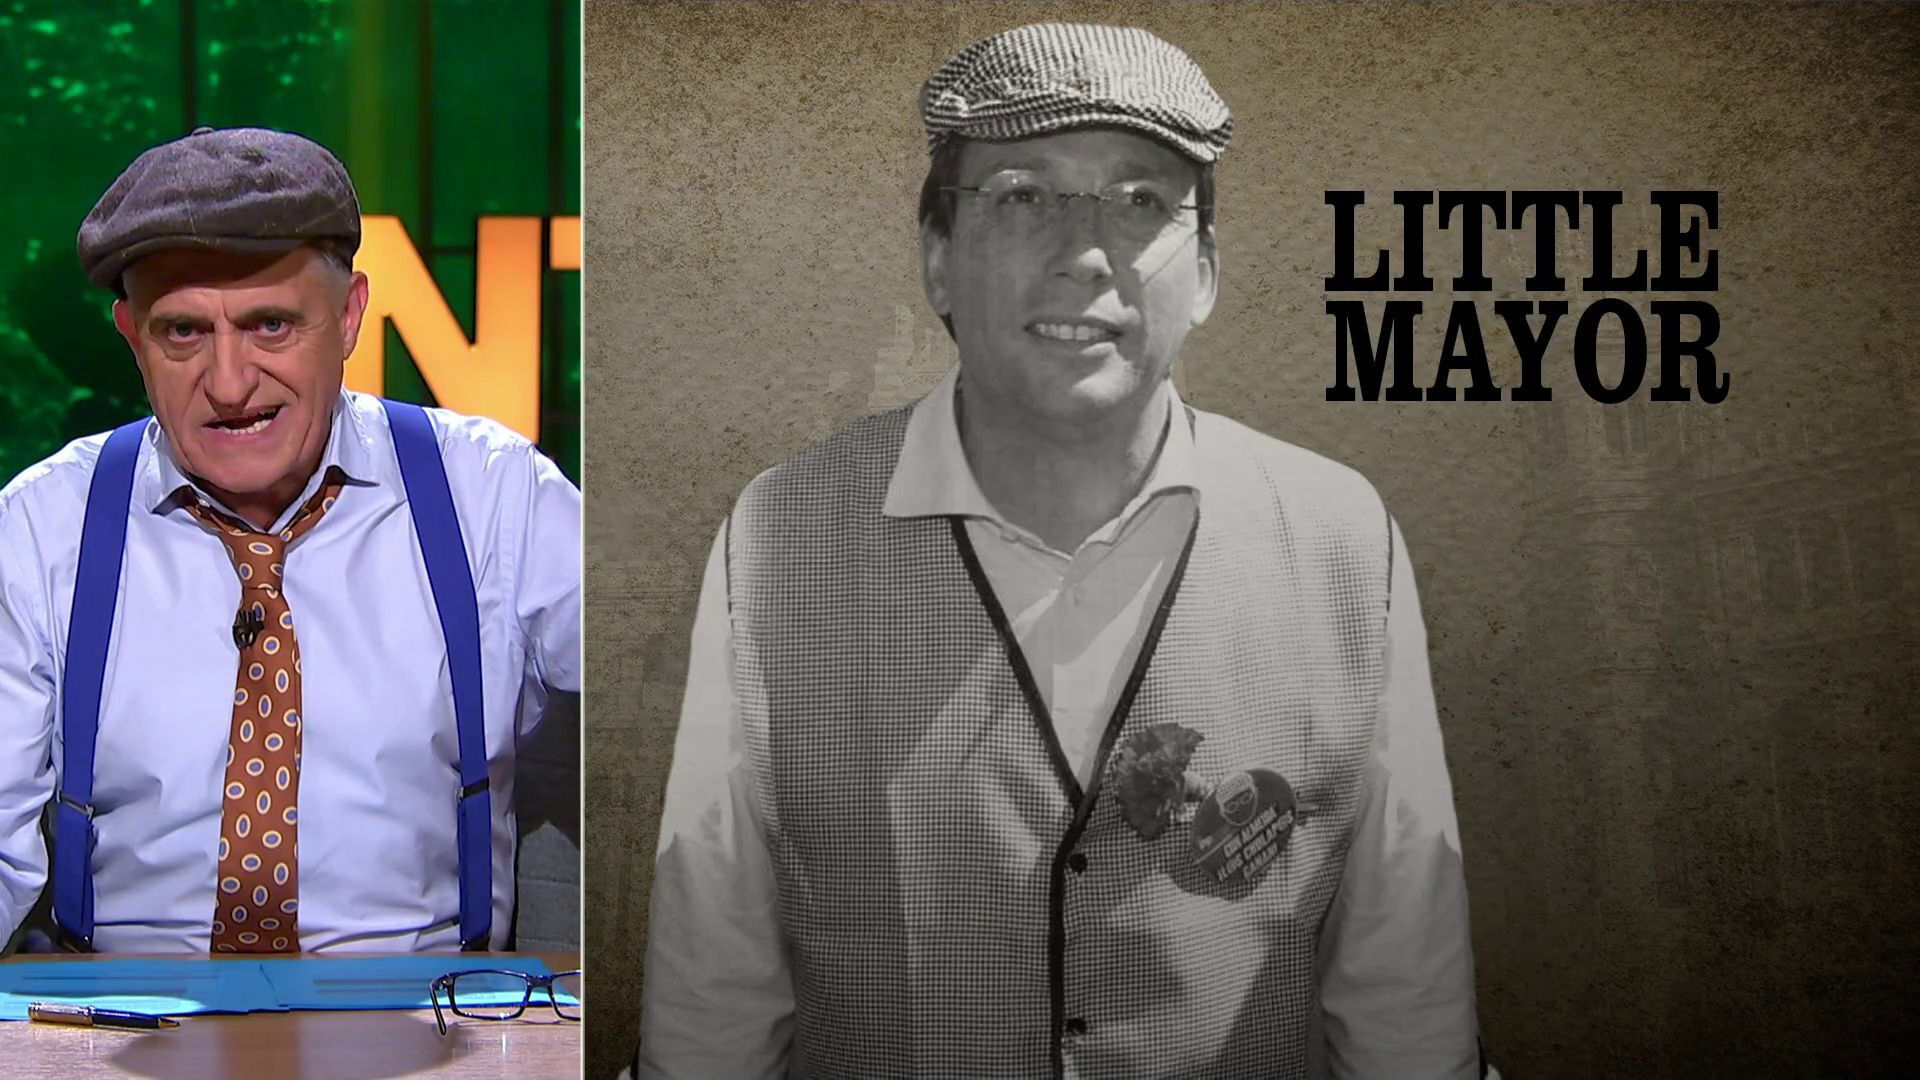 Temporada 1 (27-12-21) Ayuso 'Lady Freedom' y Almeida 'Little Mayor': así son los 'Pichi Blinders'